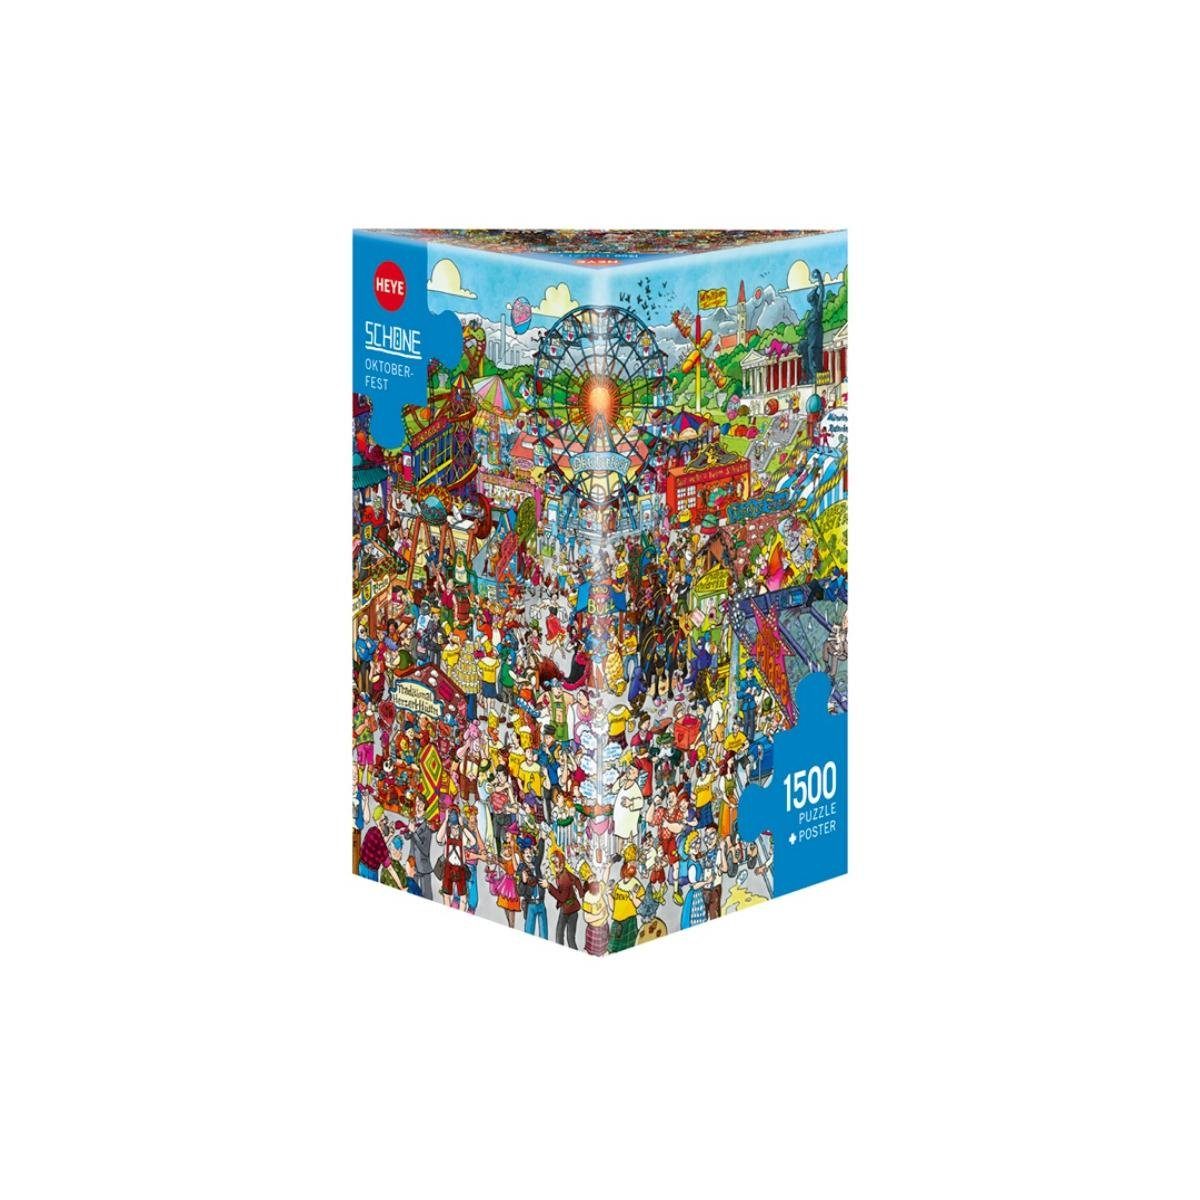 HEYE Puzzle 298425 - Oktoberfest, Cartoon im Dreieck, 1500 Teile -..., 1500  Puzzleteile